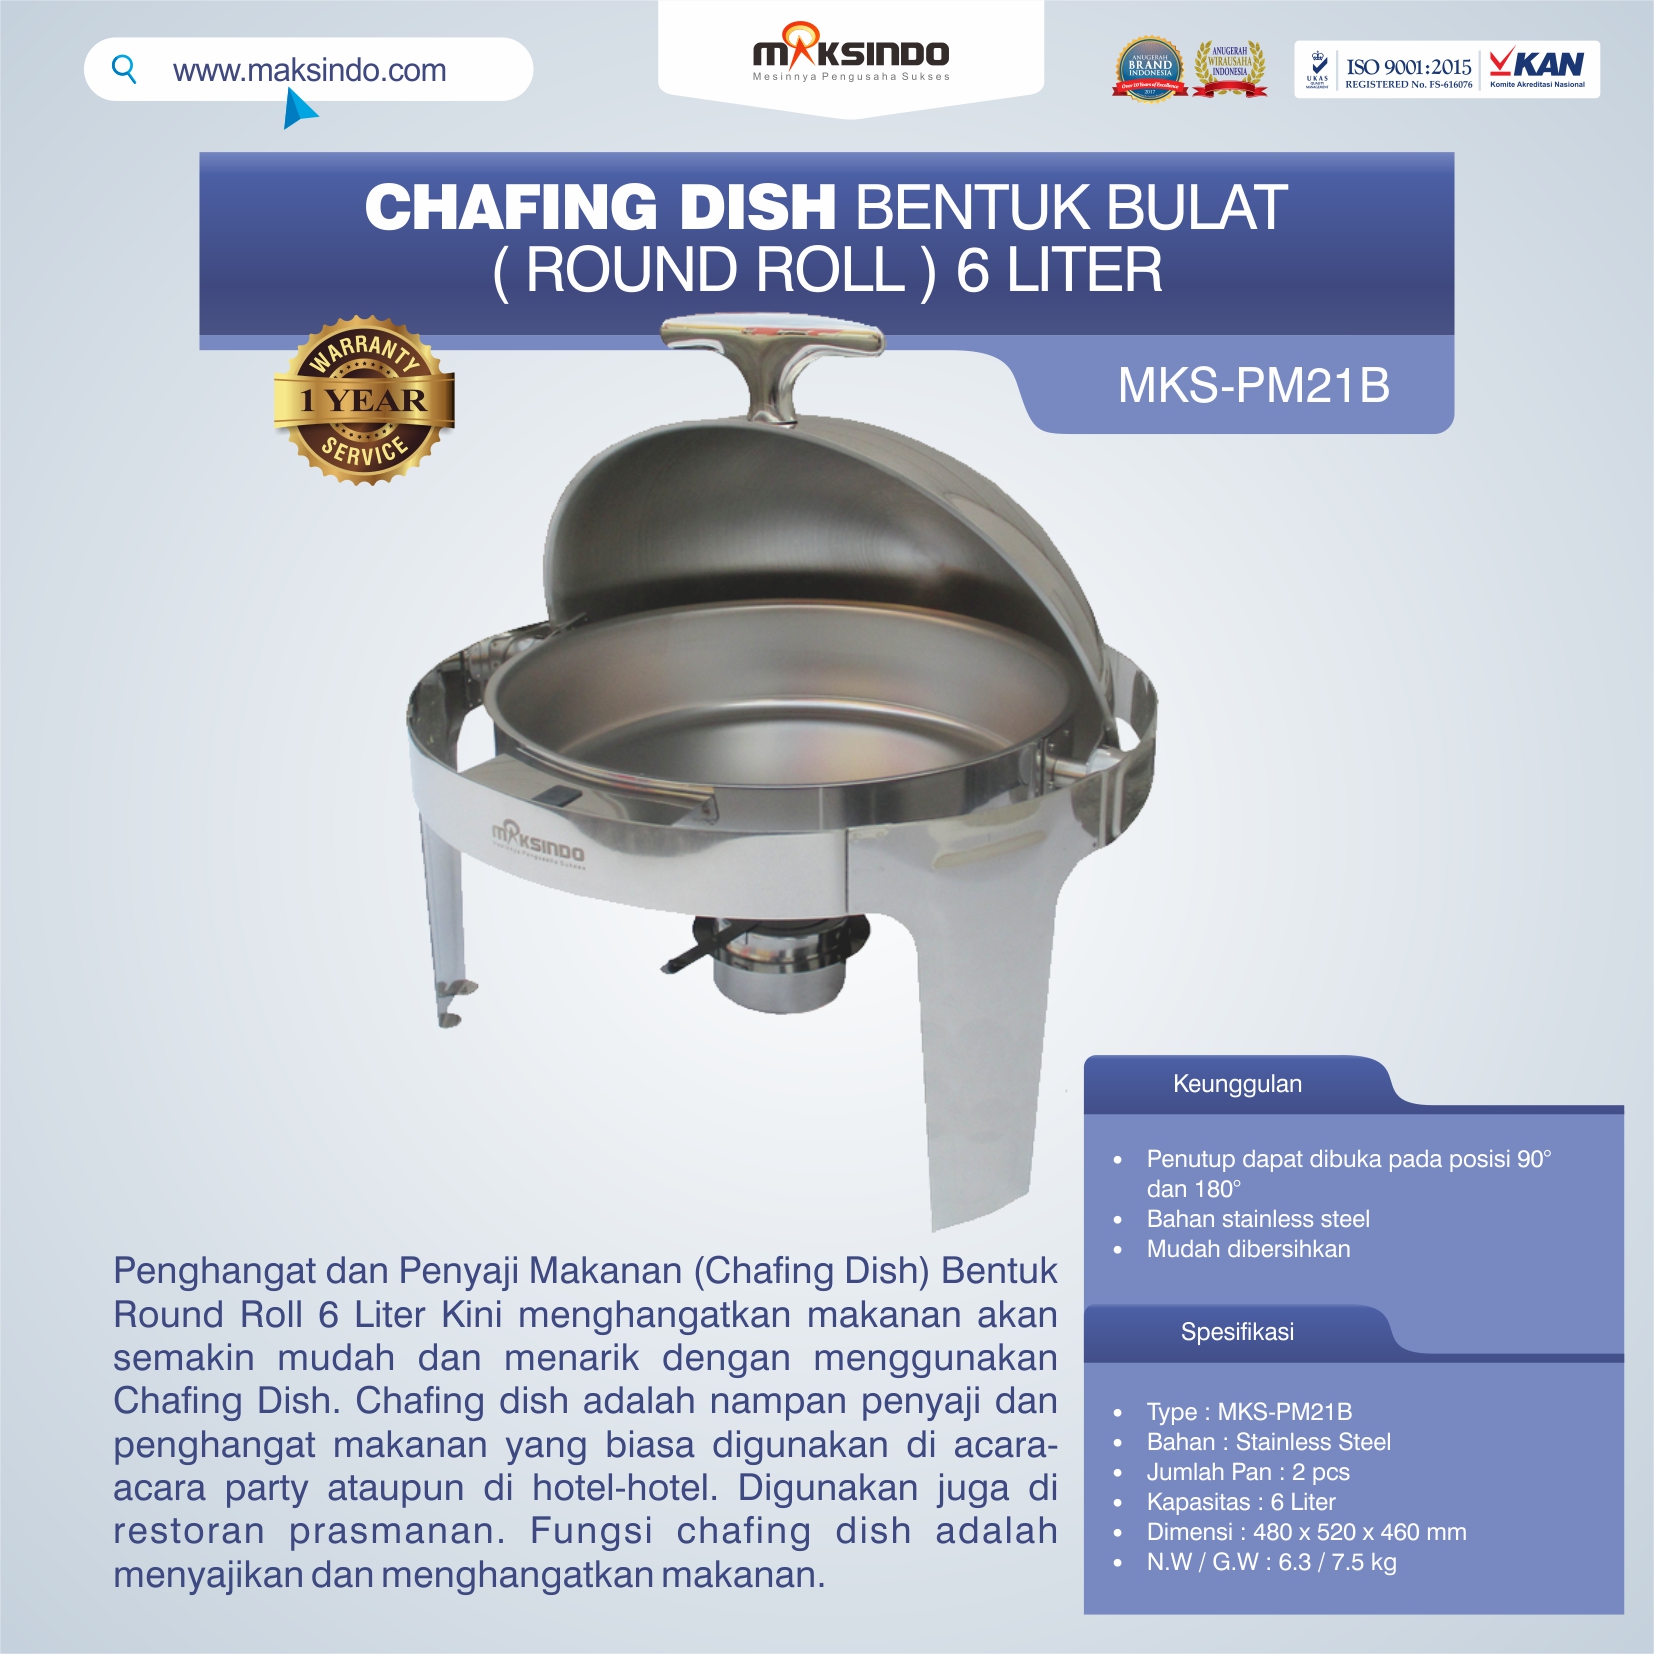 Jual Chafing Dish Bentuk Bulat (Round Roll) 6 Liter di Jakarta